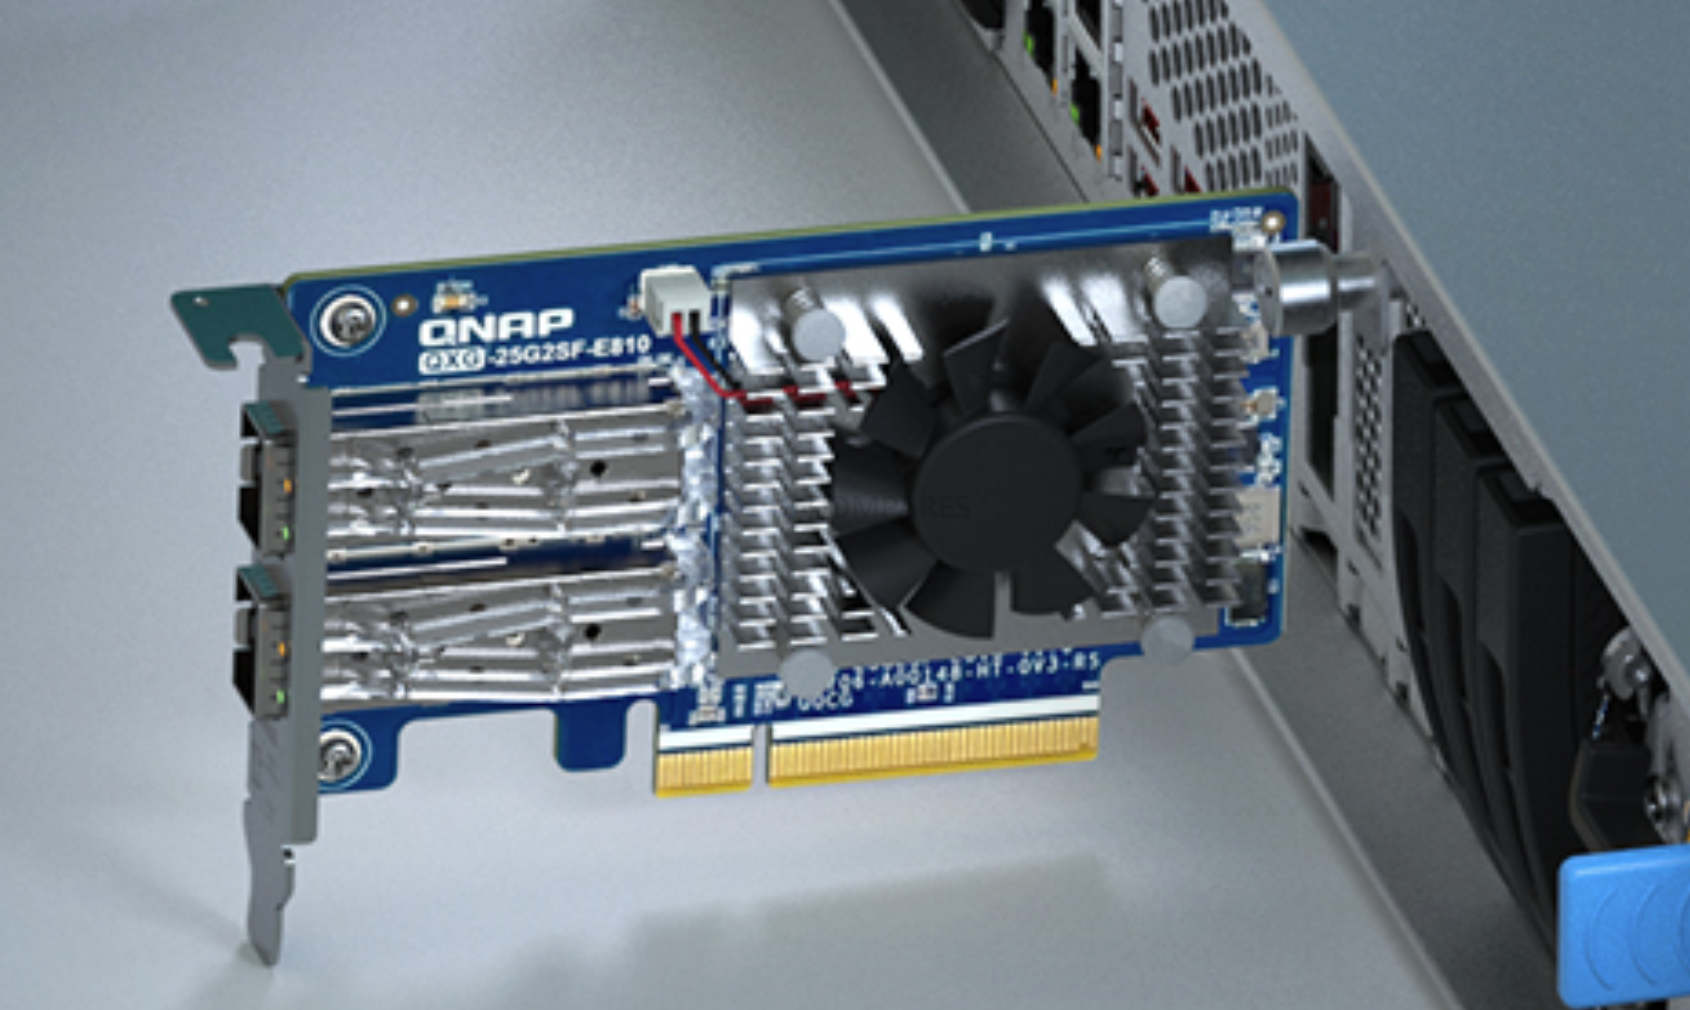 QNAP выпустила сетевую карту QXG-25G2SF-E810 с двумя портами 25GbE<